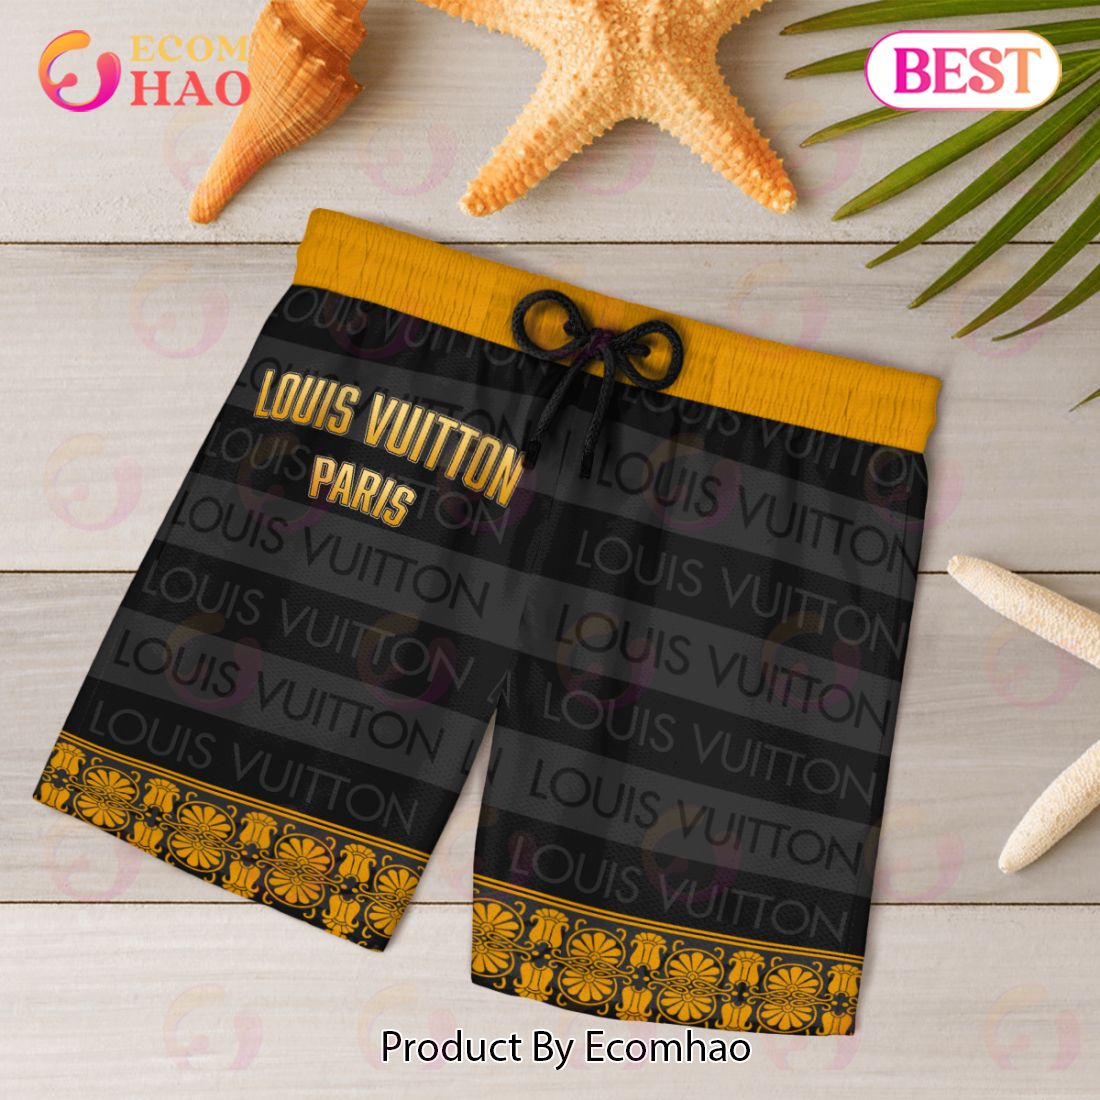 Louis Vuitton Monogram Black Mix Gold Hawaiian Shirt And Beach Shorts -  Tagotee